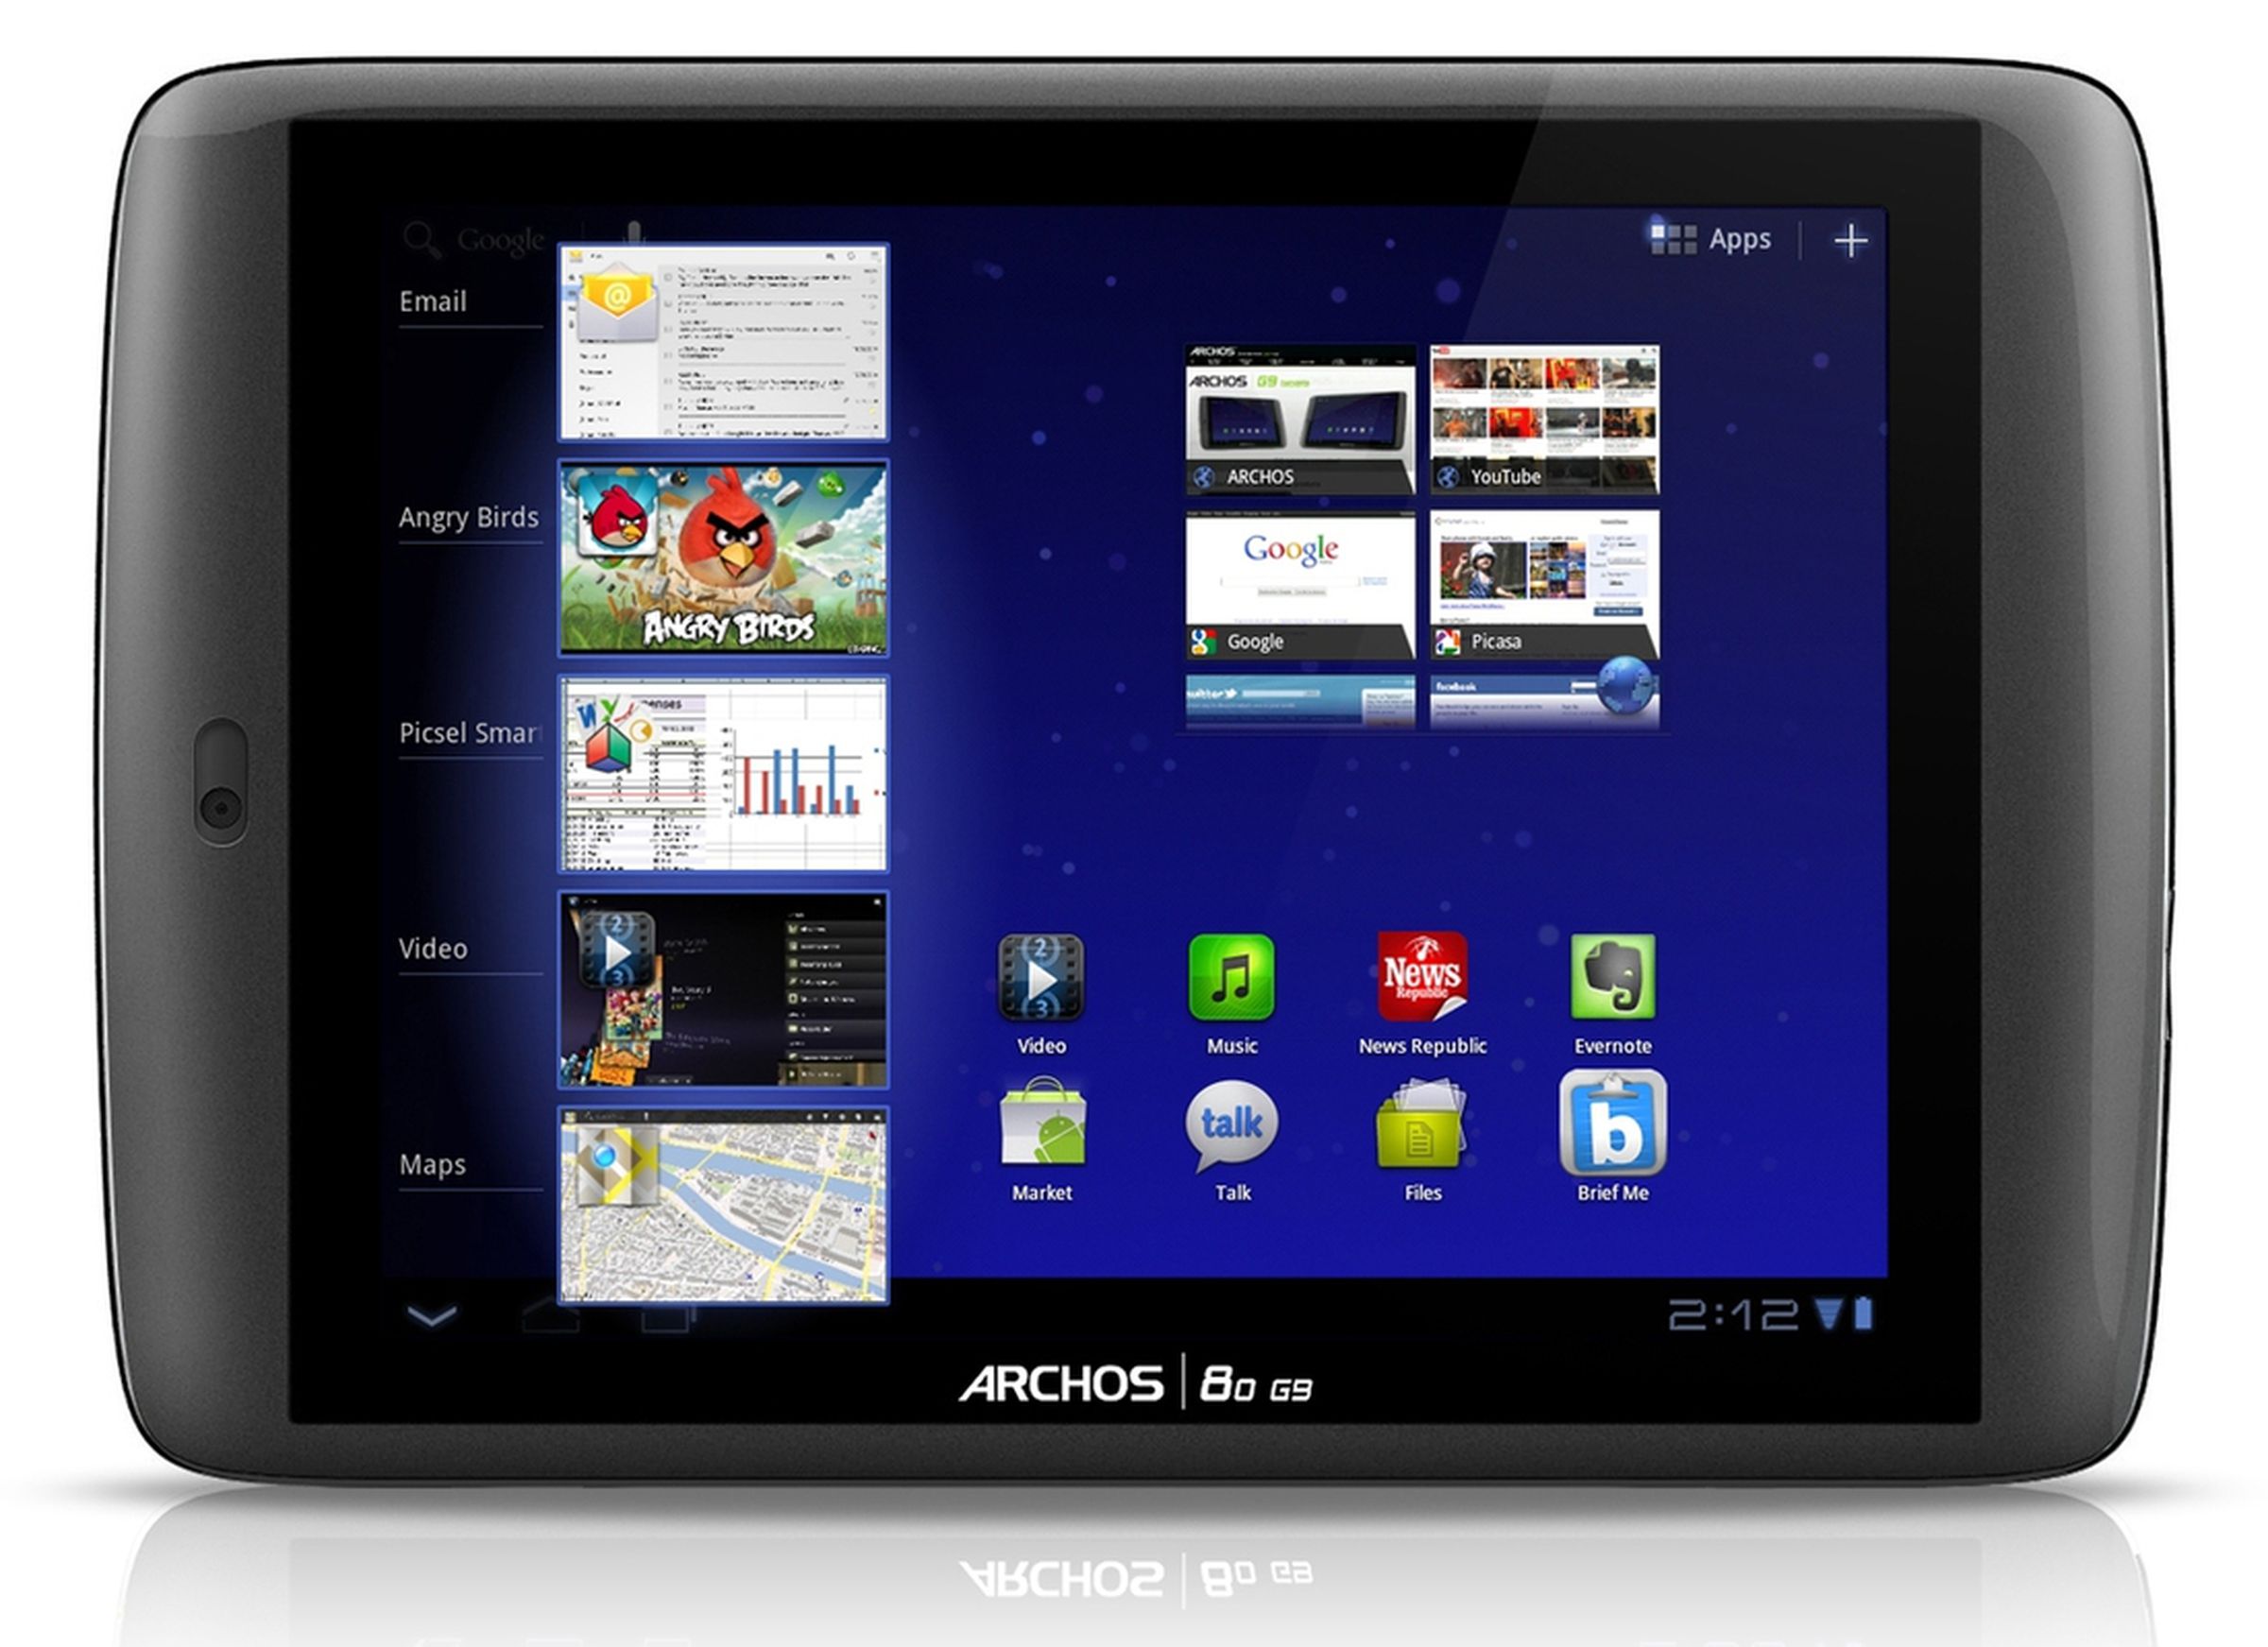 Archos 80 G9 Honeycomb Tablet